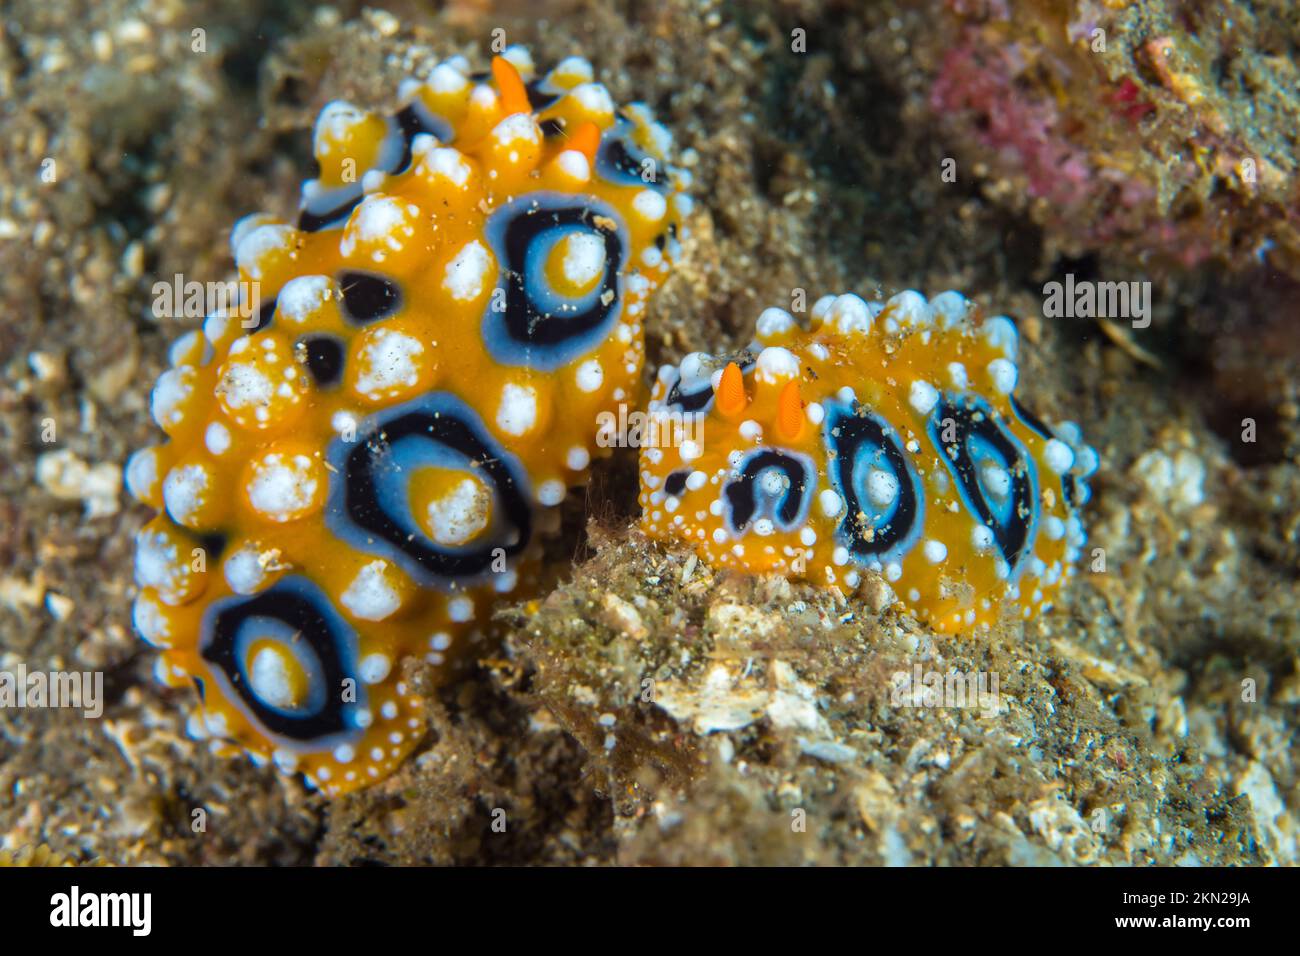 Colorful nudibranch sea slug crawling above coral reef in indonesia Stock Photo